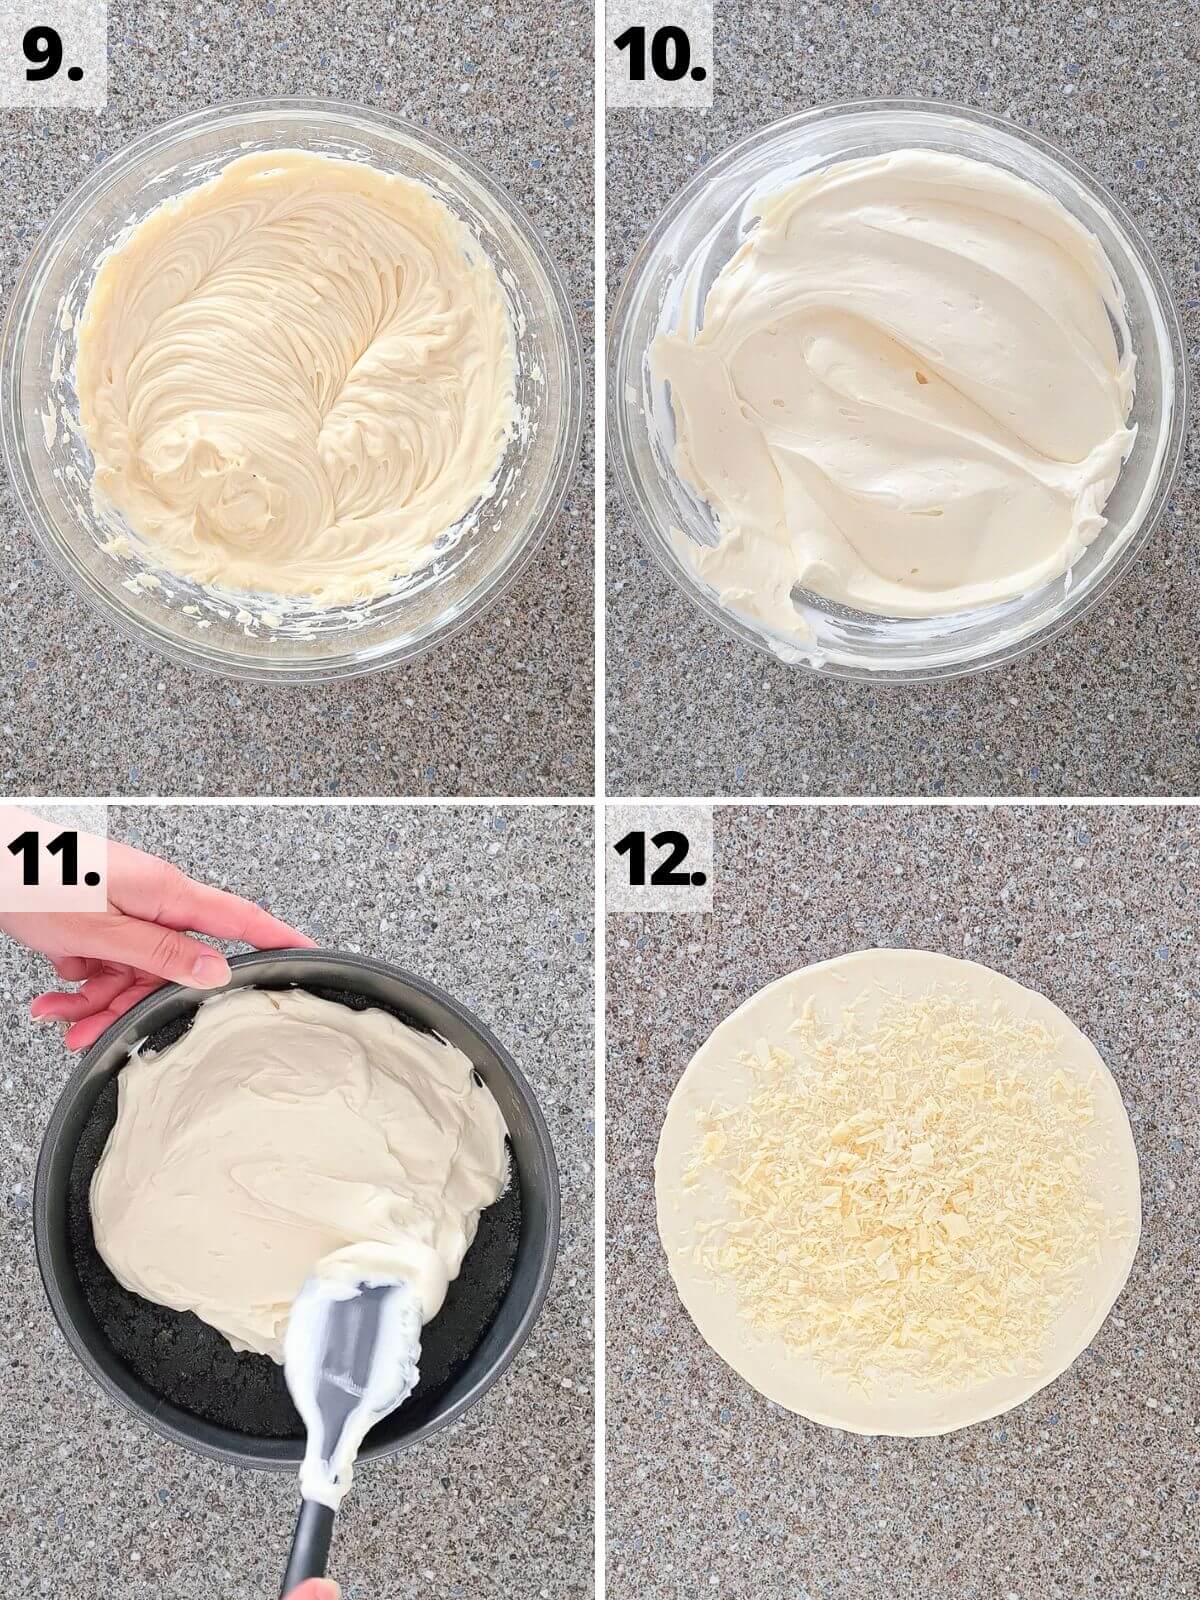 baileys white chocolate no bake cheesecake recipe method steps 9 to 12.